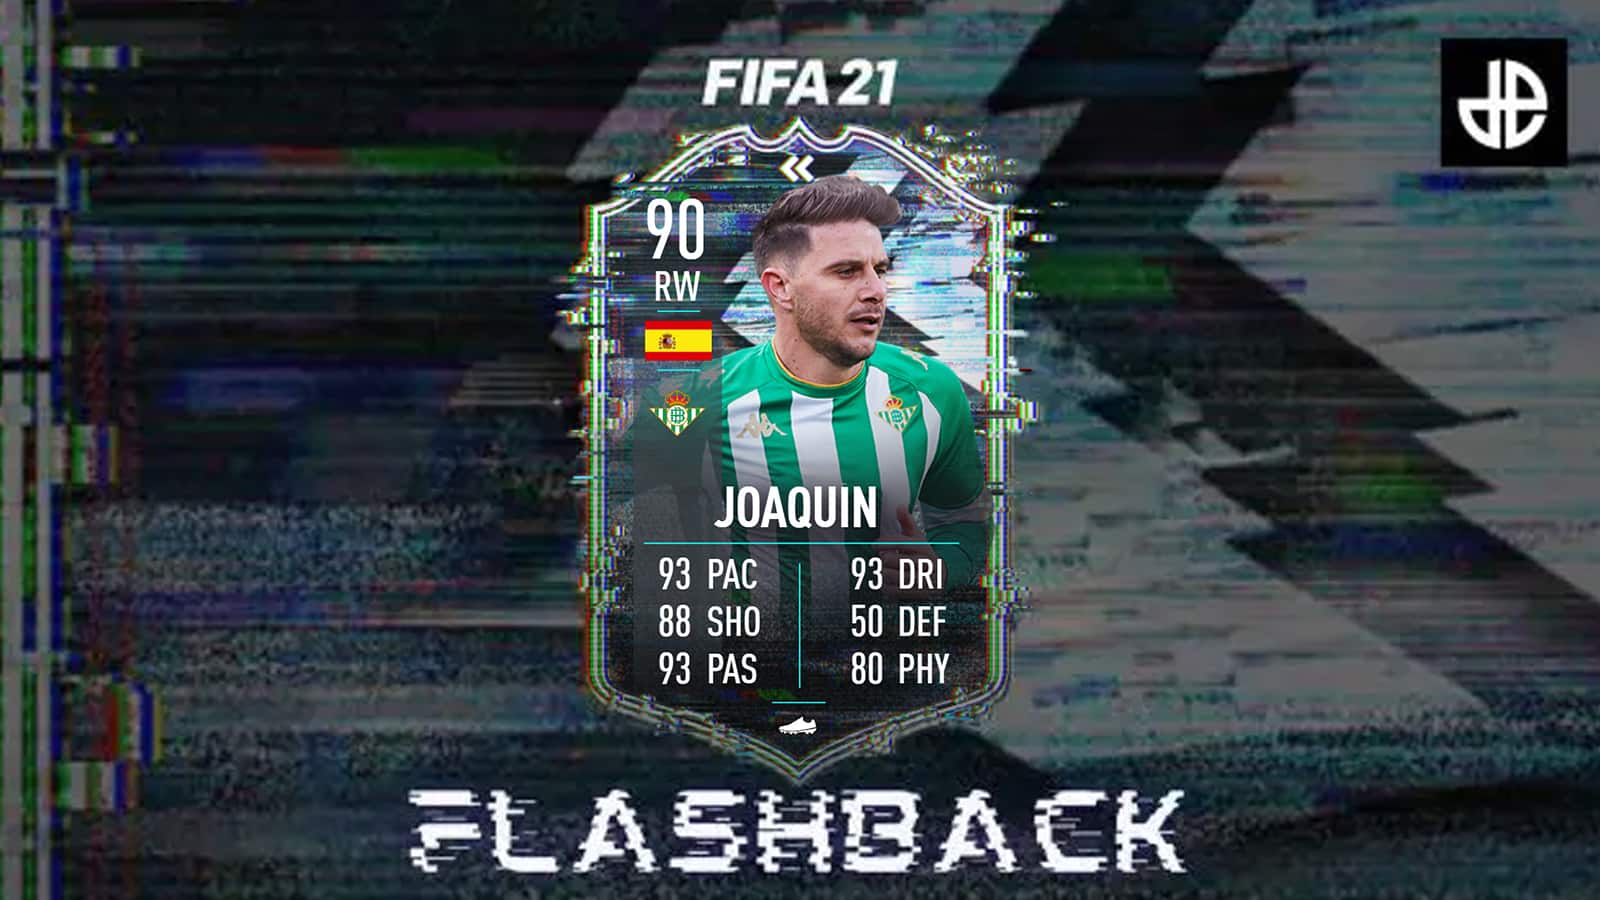 Joaquin FIFA 21 Flashback TOTS